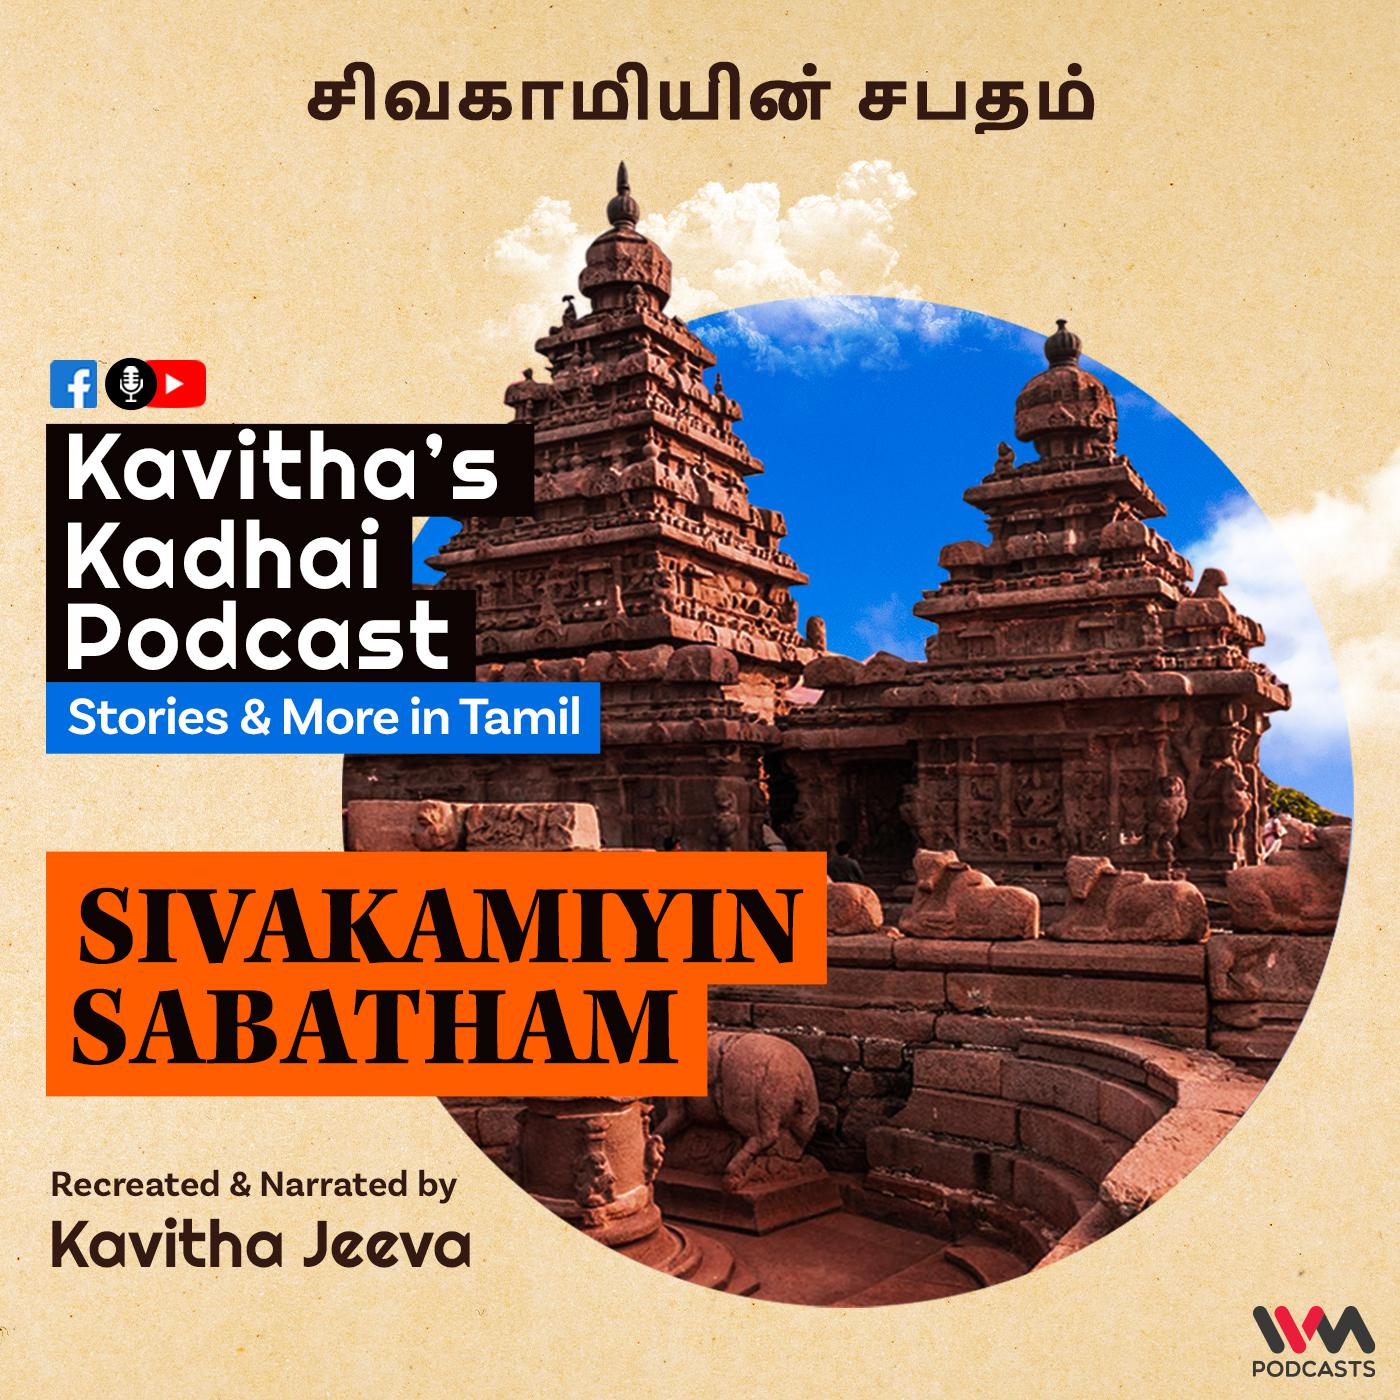 KadhaiPodcast's Sivakamiyin Sabatham with Kavitha Jeeva - Episode #103